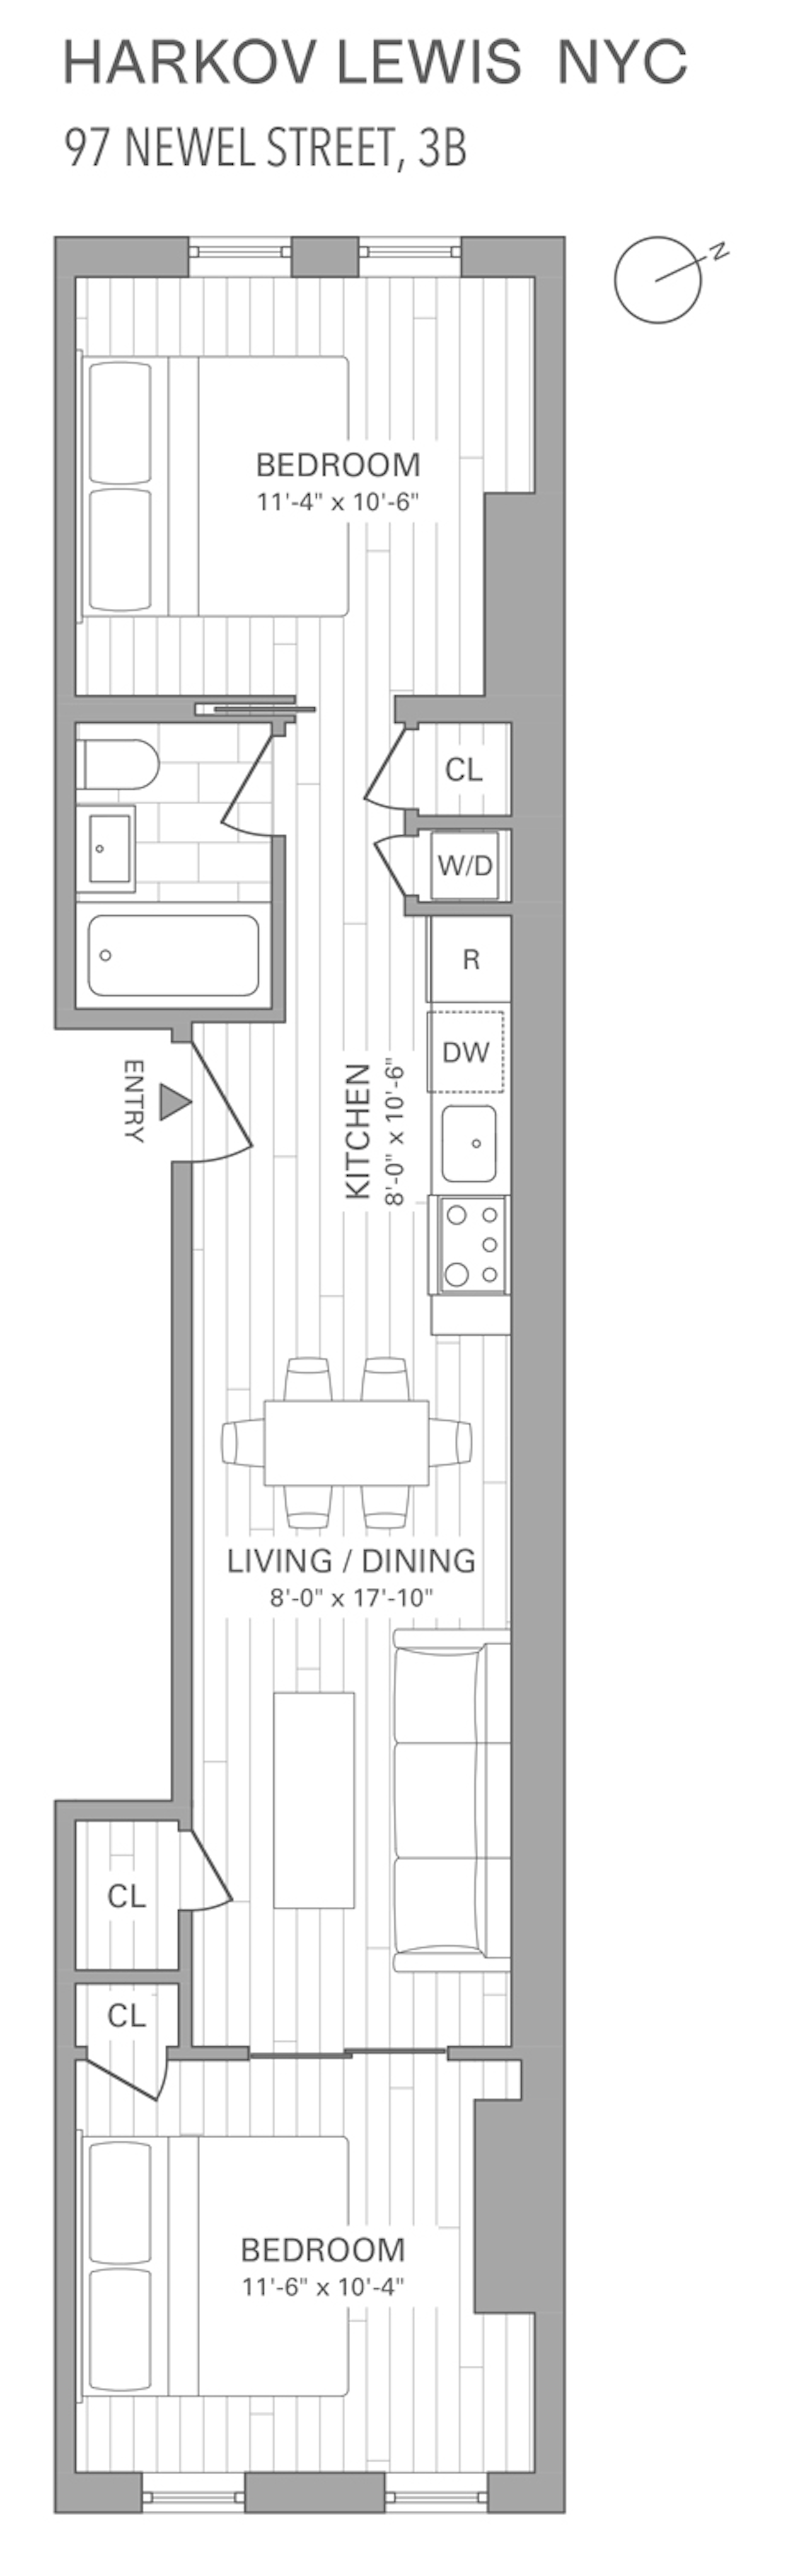 Floorplan for 97 Newel Street, 3B